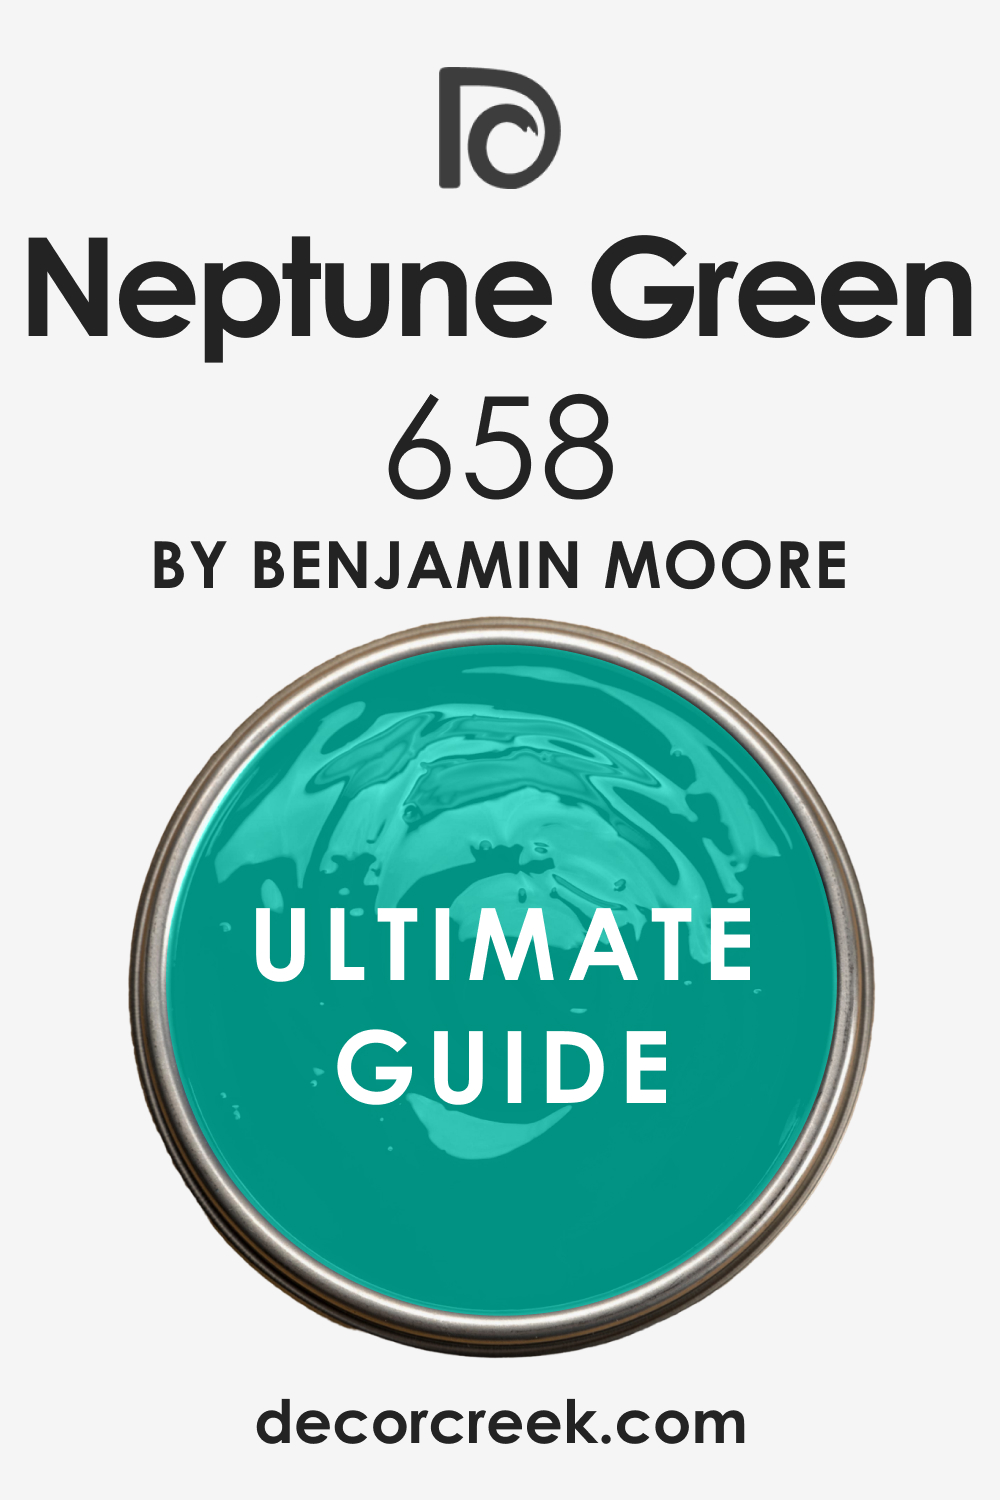 Ultimate Guide of Neptune Green 658 